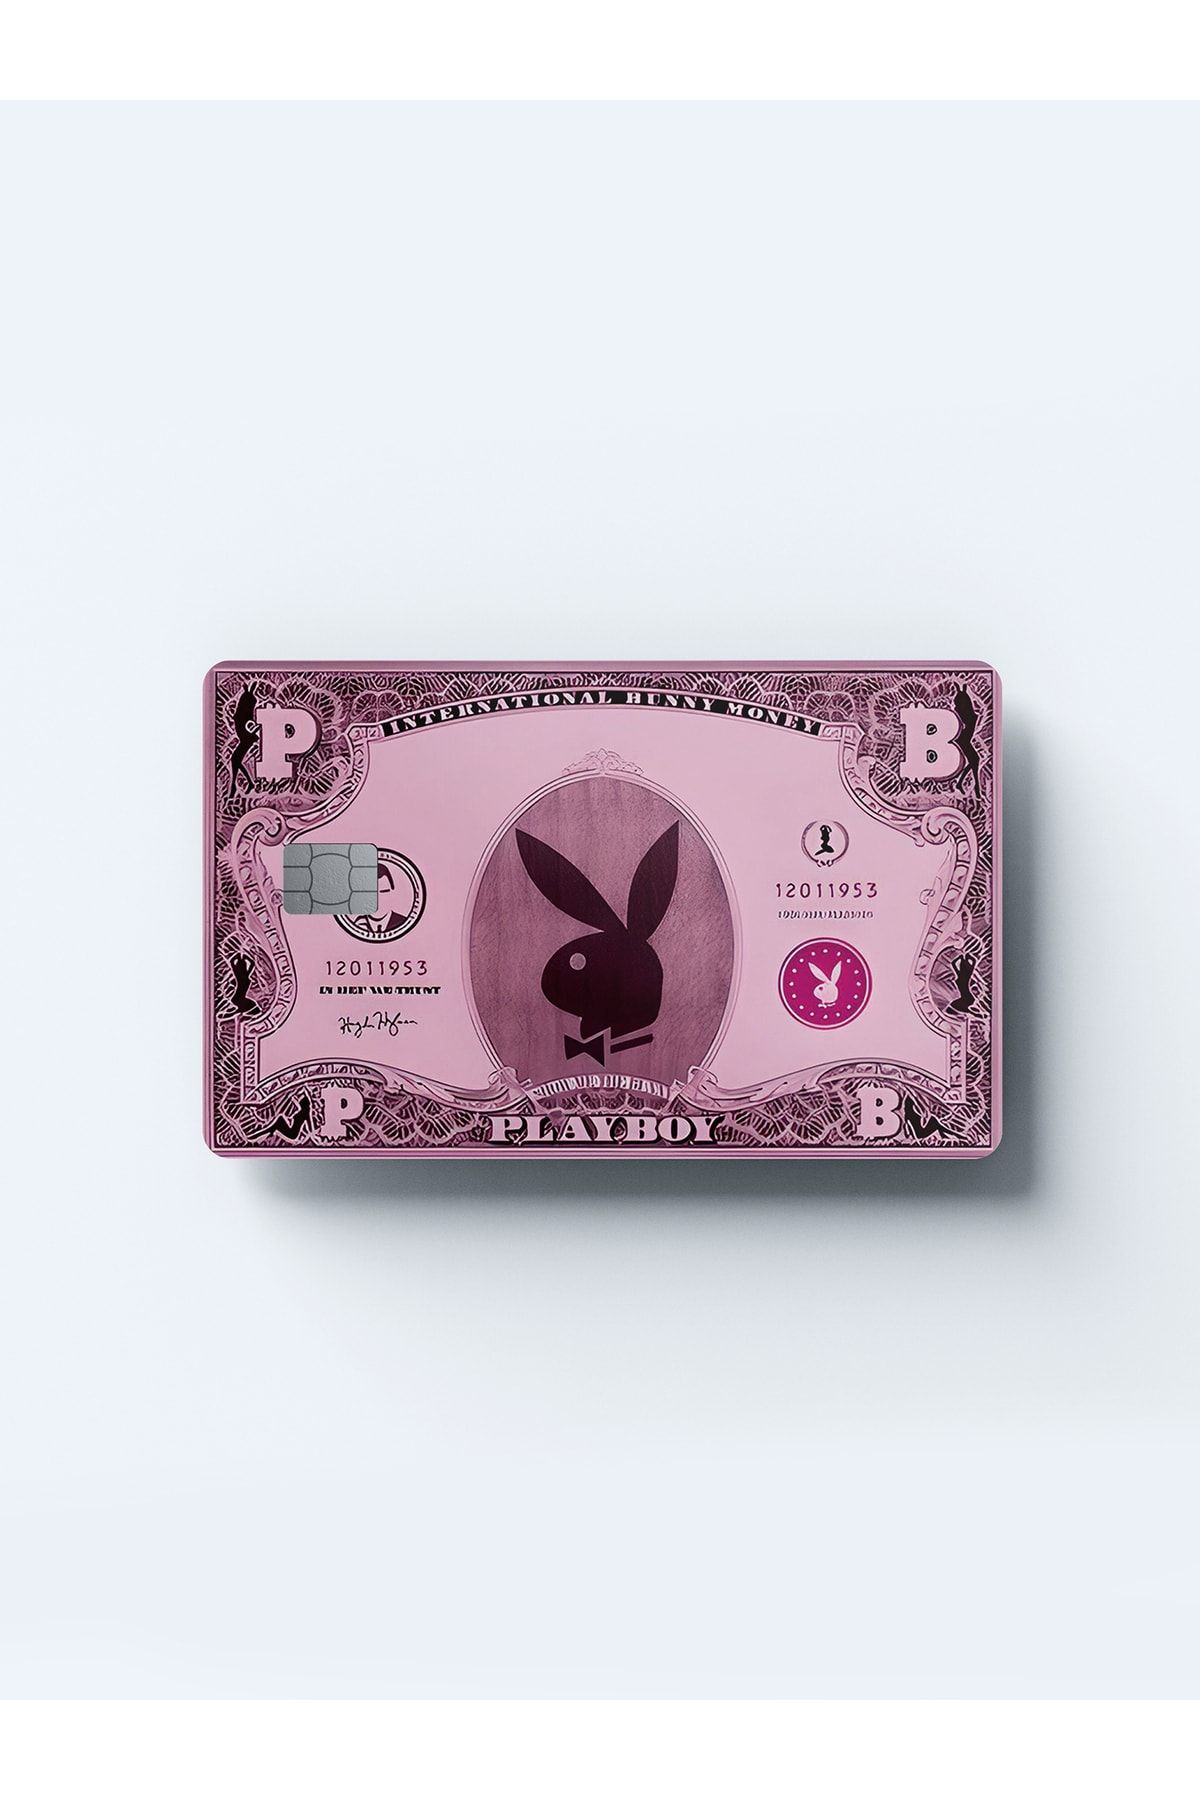 Planet Butik Playboy Pembe Dolar Kart Kaplama Sticker